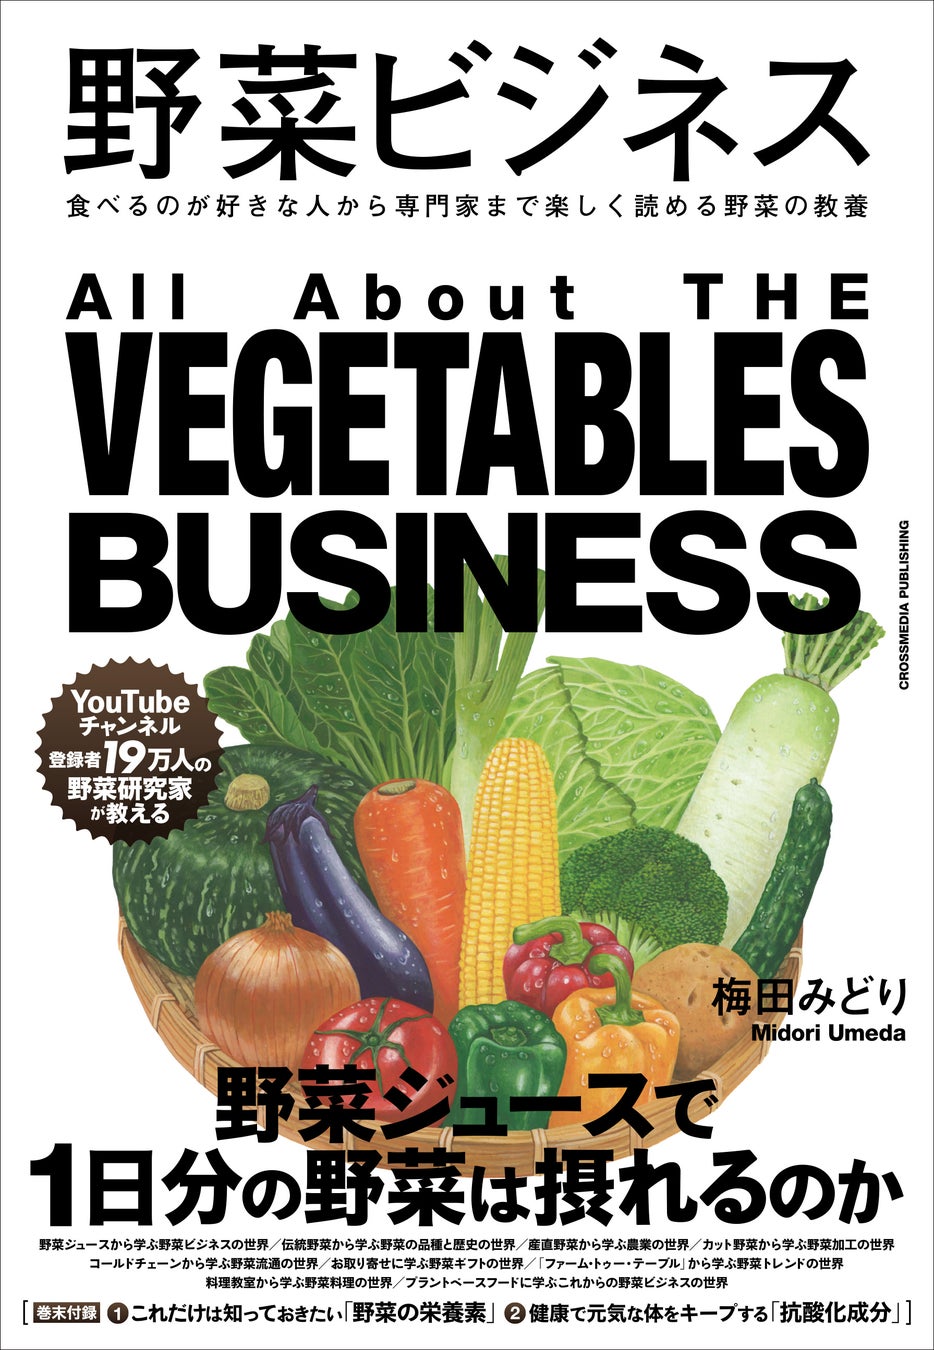 【YouTubeチャンネル登録者数19万人】野菜の可能性を探究し続ける野菜研究家が教える、野菜の教養書『野菜ビ...